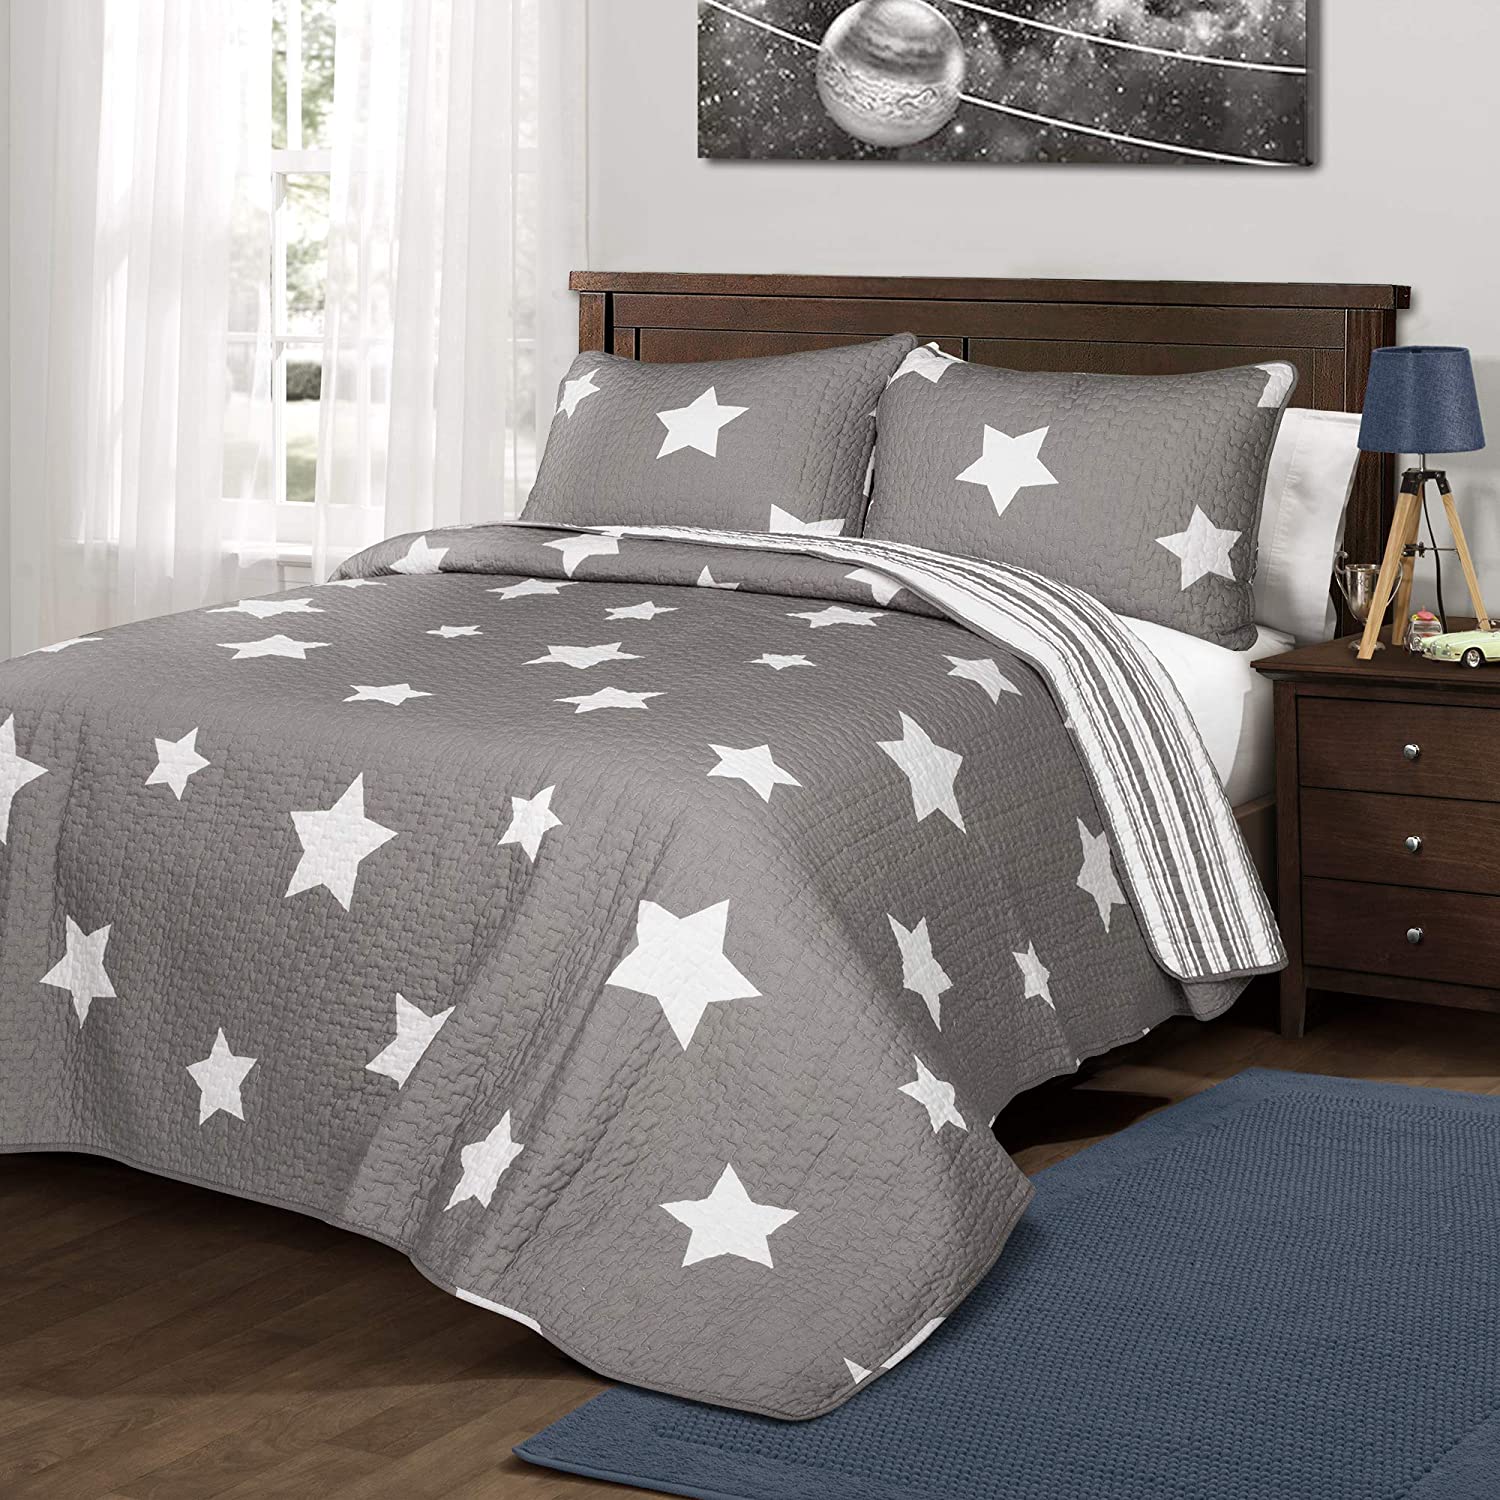 Lush Decor Navy Star Quilt-Reversible 3 Piece Pattern Striped Bedding Set  with P | eBay